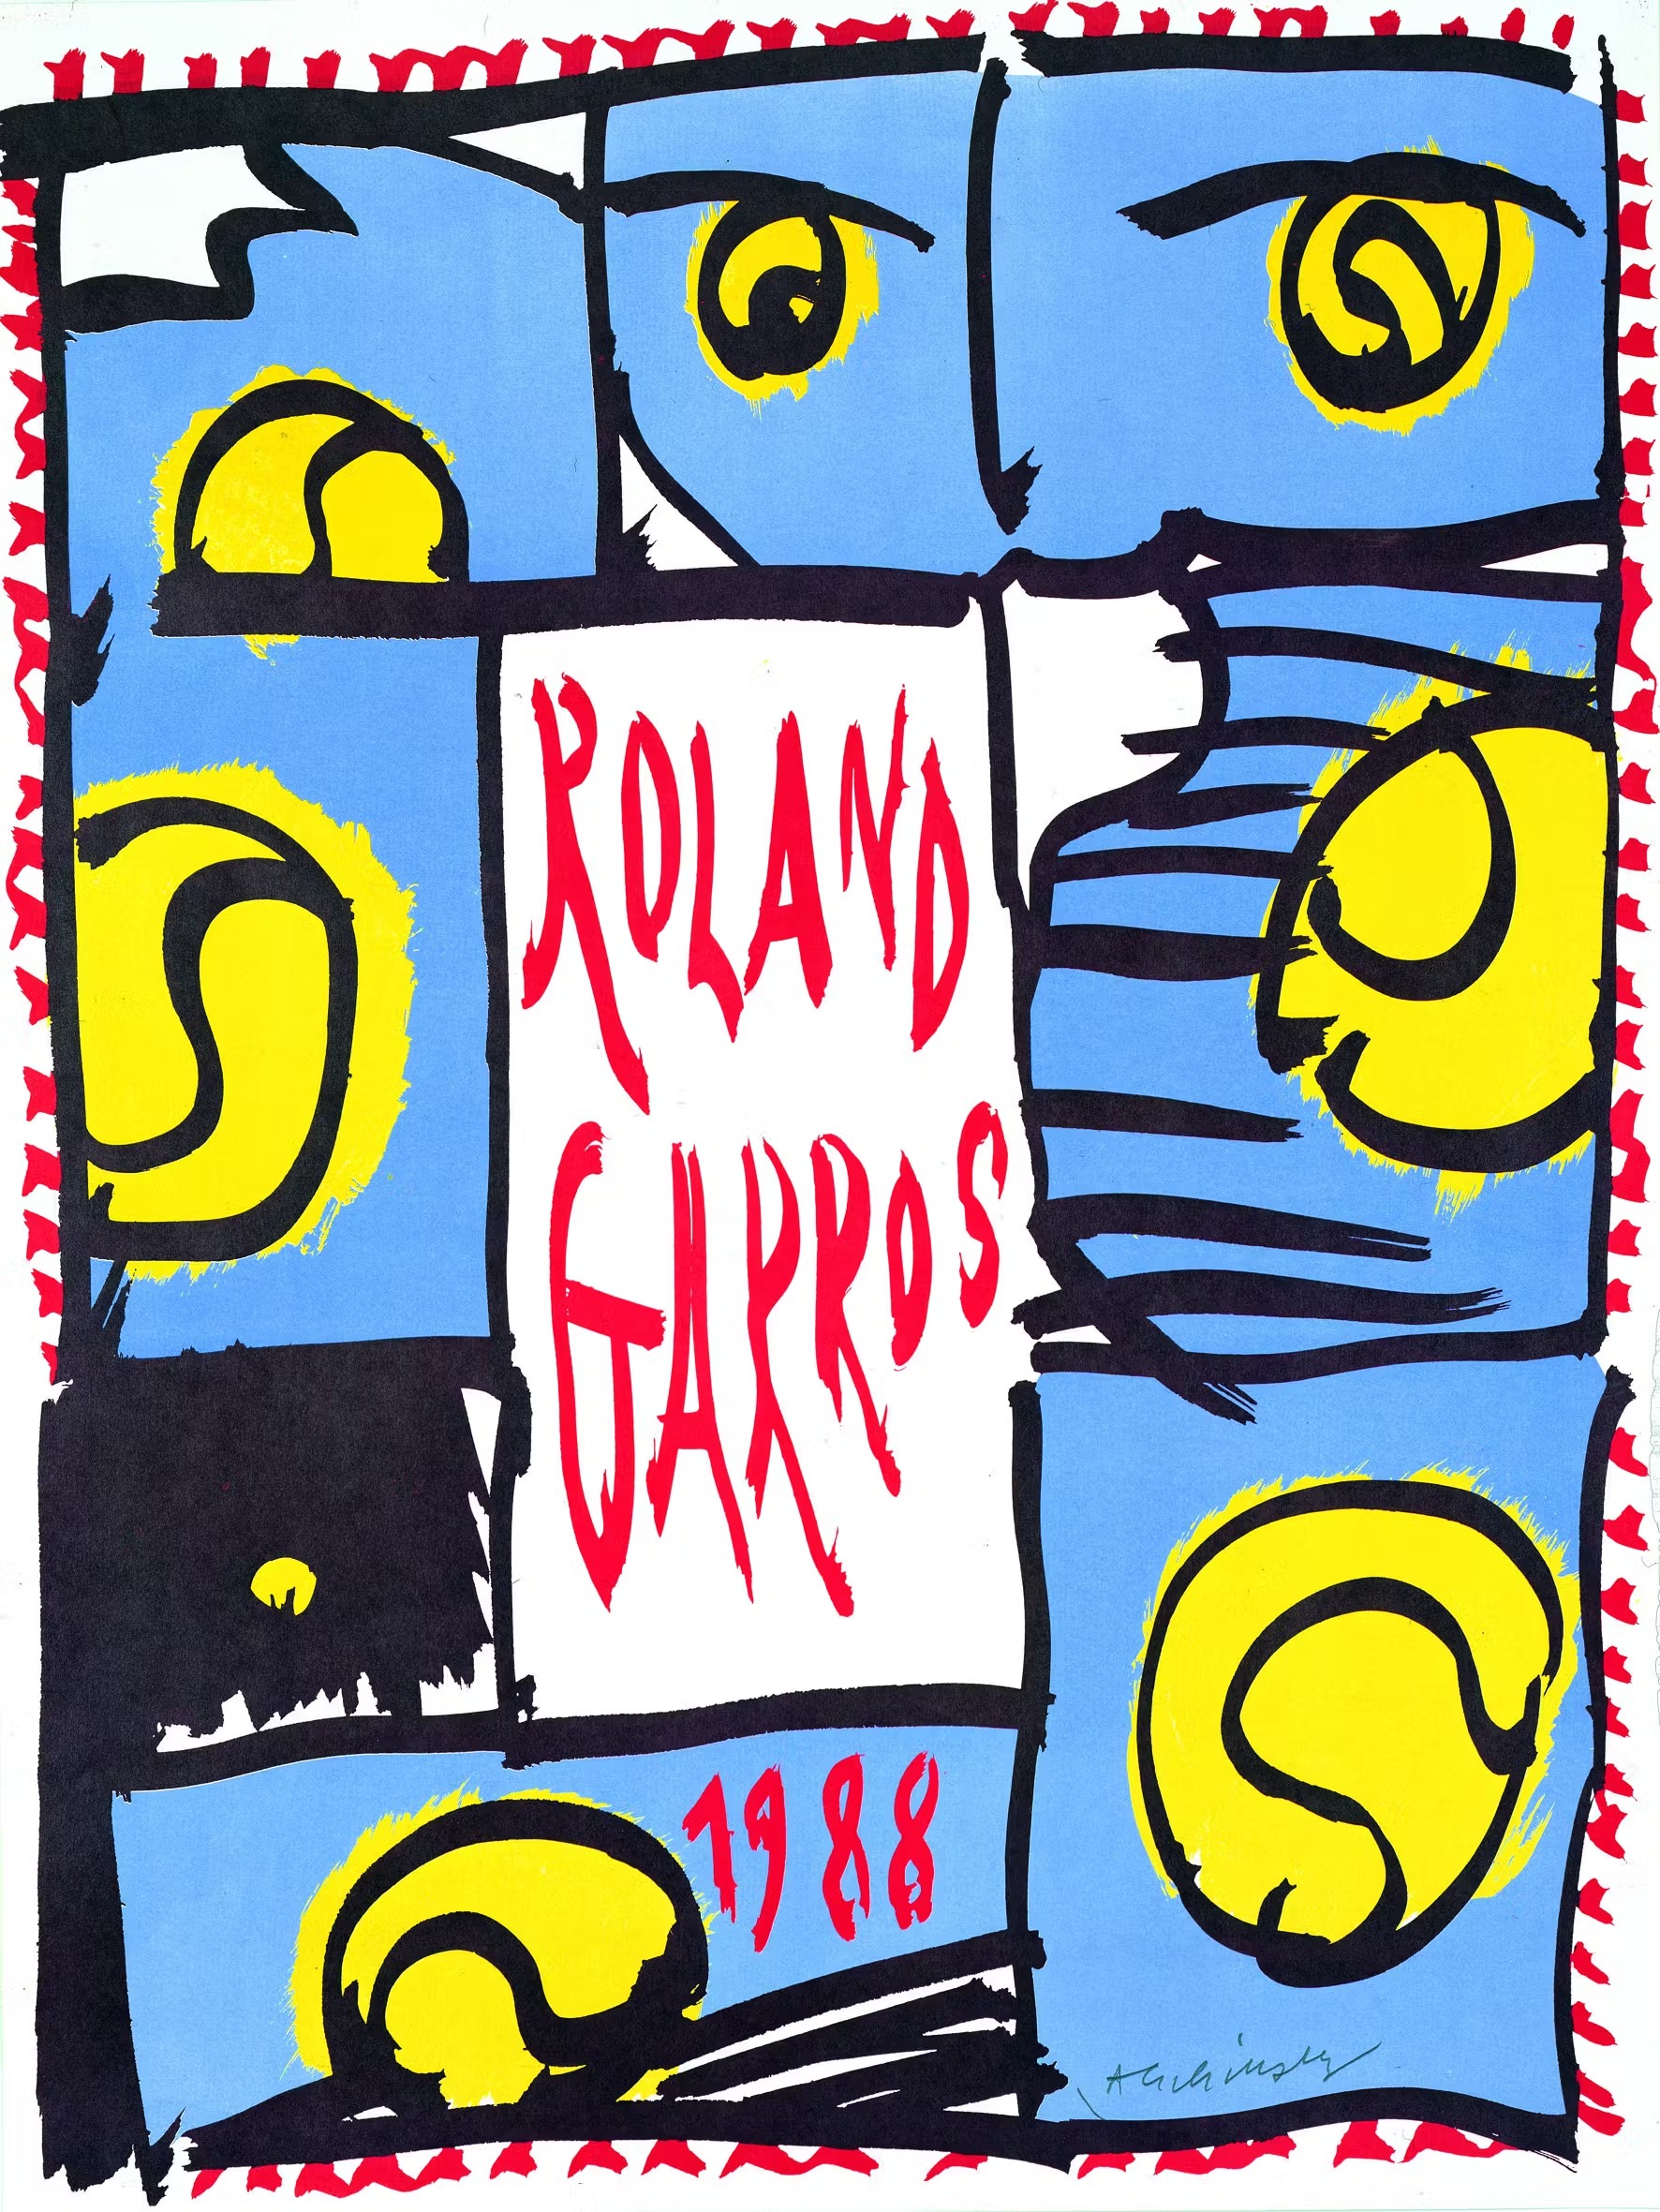 Roland Garros 1988 poster